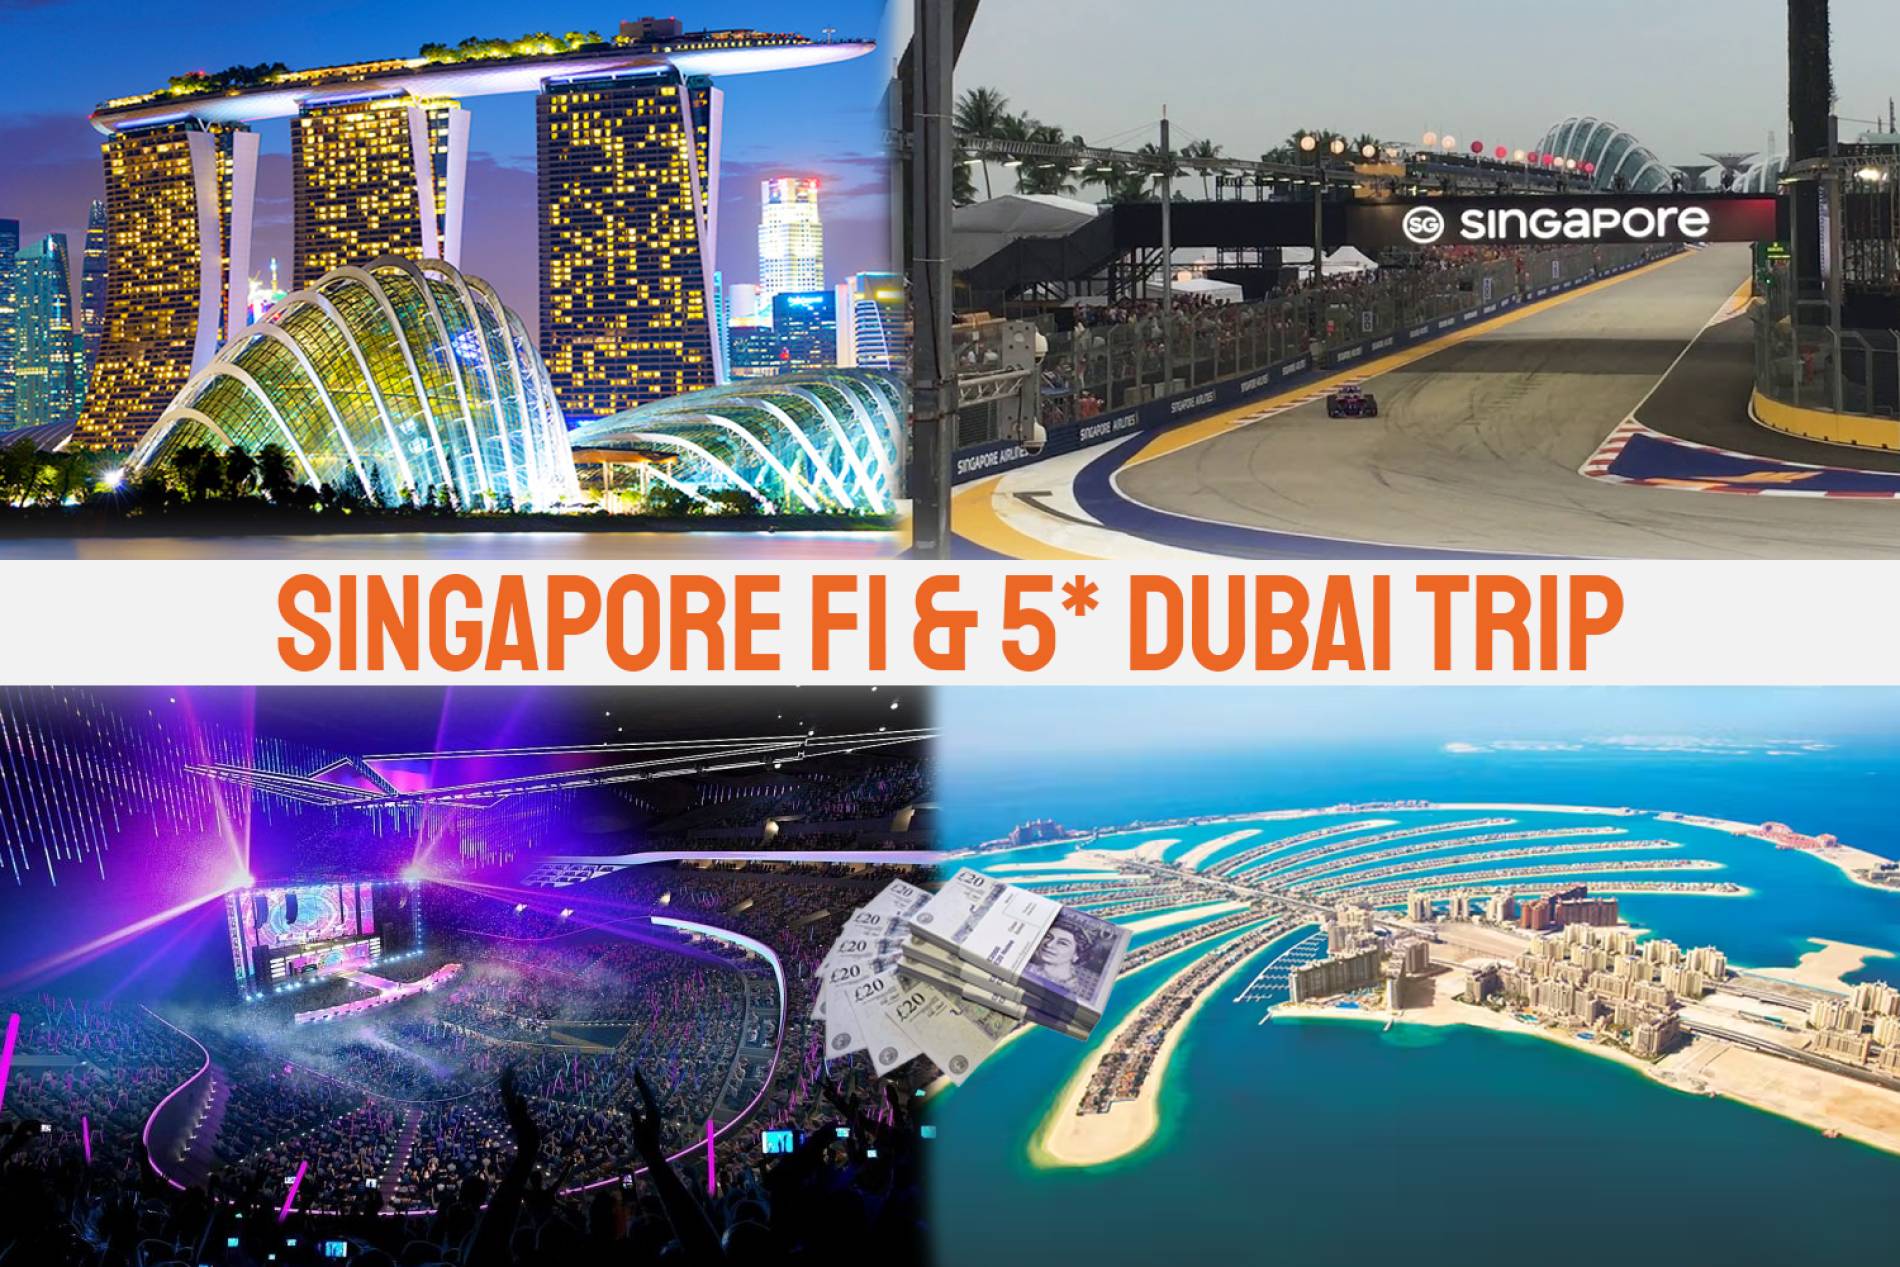 Singapore F1 & 5* Dubai Trip